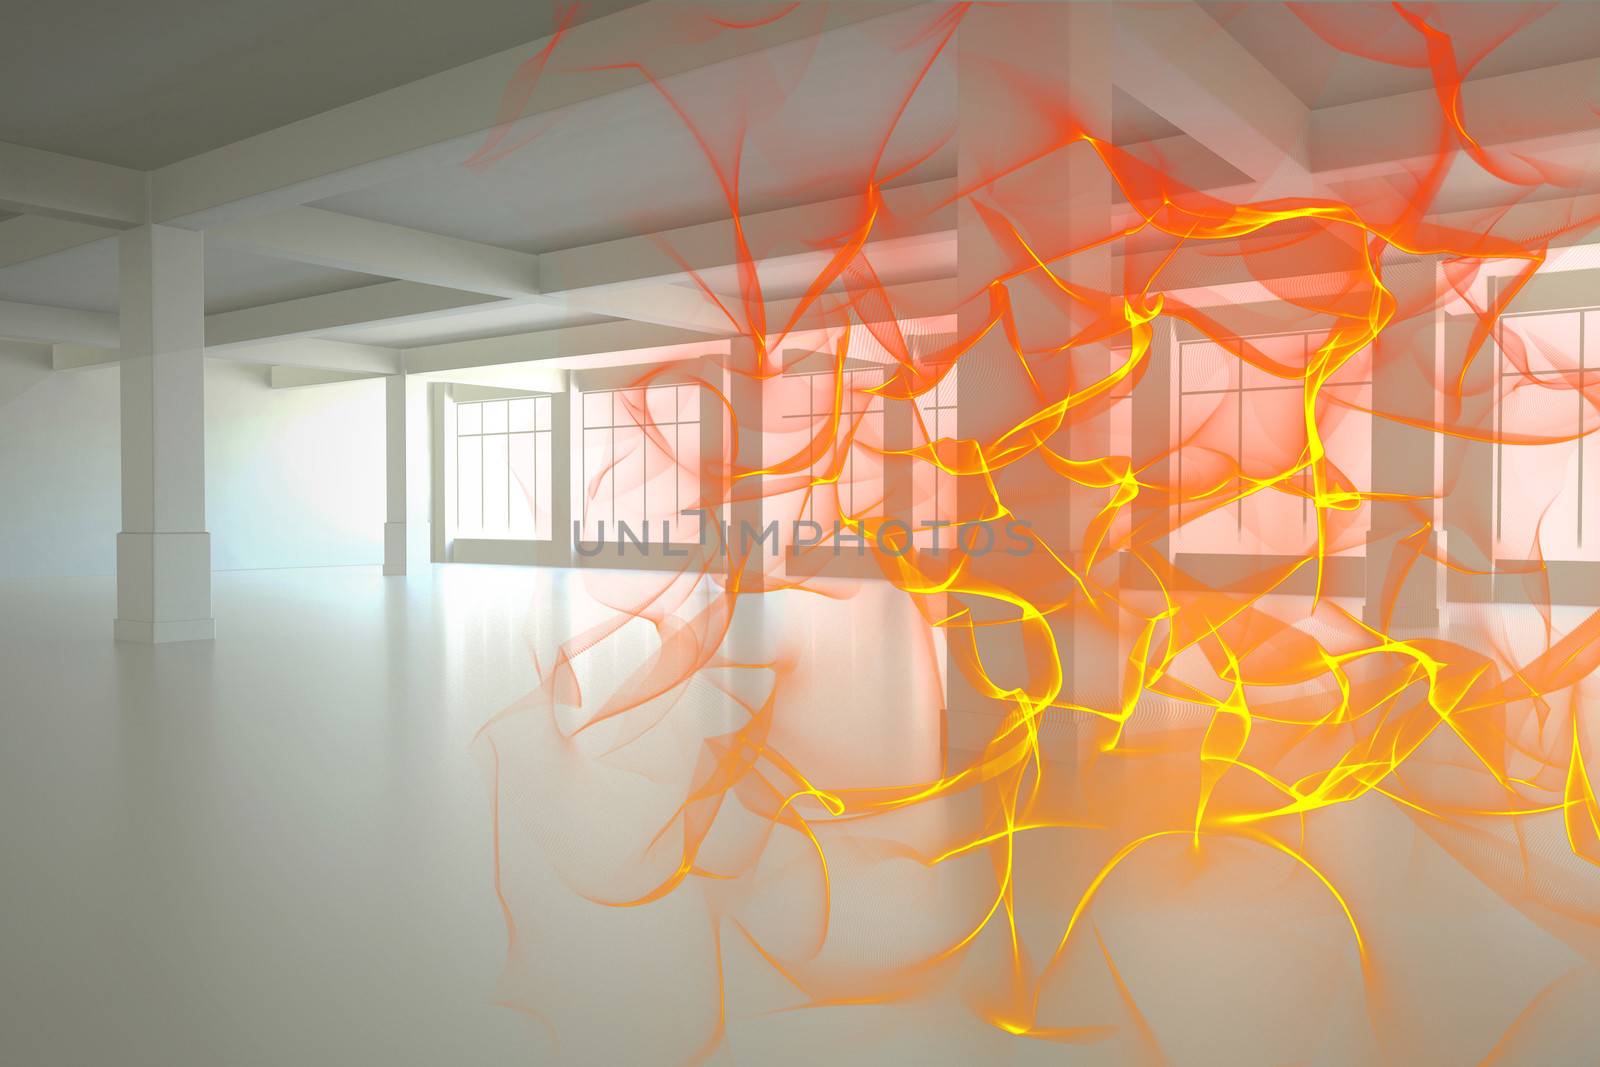 Abstract design in orange by Wavebreakmedia